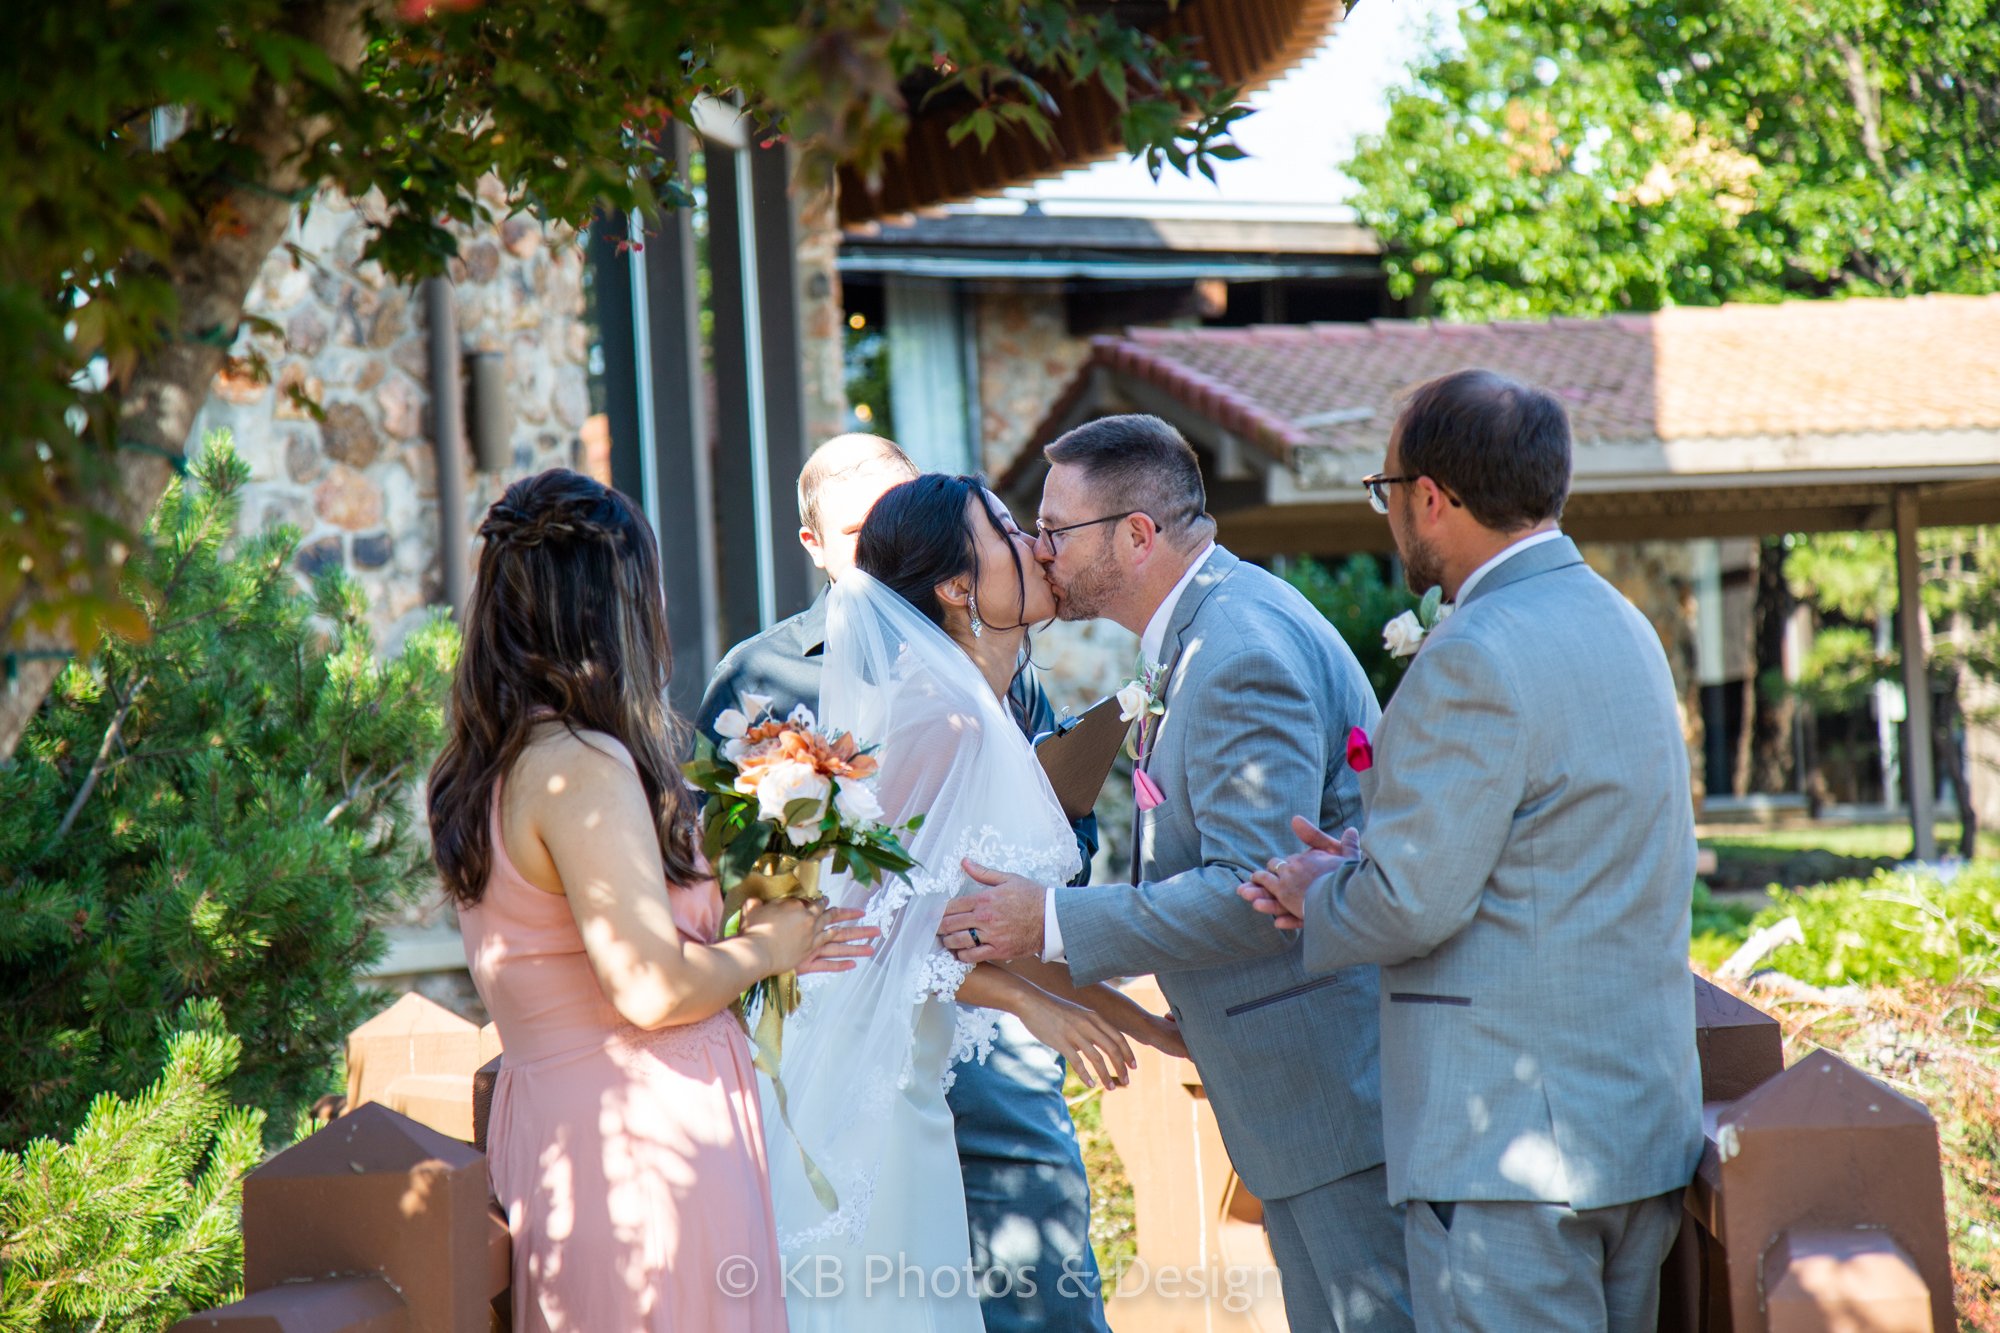 Wedding-Destination-Photography-Lake-of-the-Ozarks-Missouri-Nick_Irene-Jefferson-City-bride-groom-Lodge-of-Four-Seasons-wedding-photographer-KB-Photos-and-Design-378.jpg